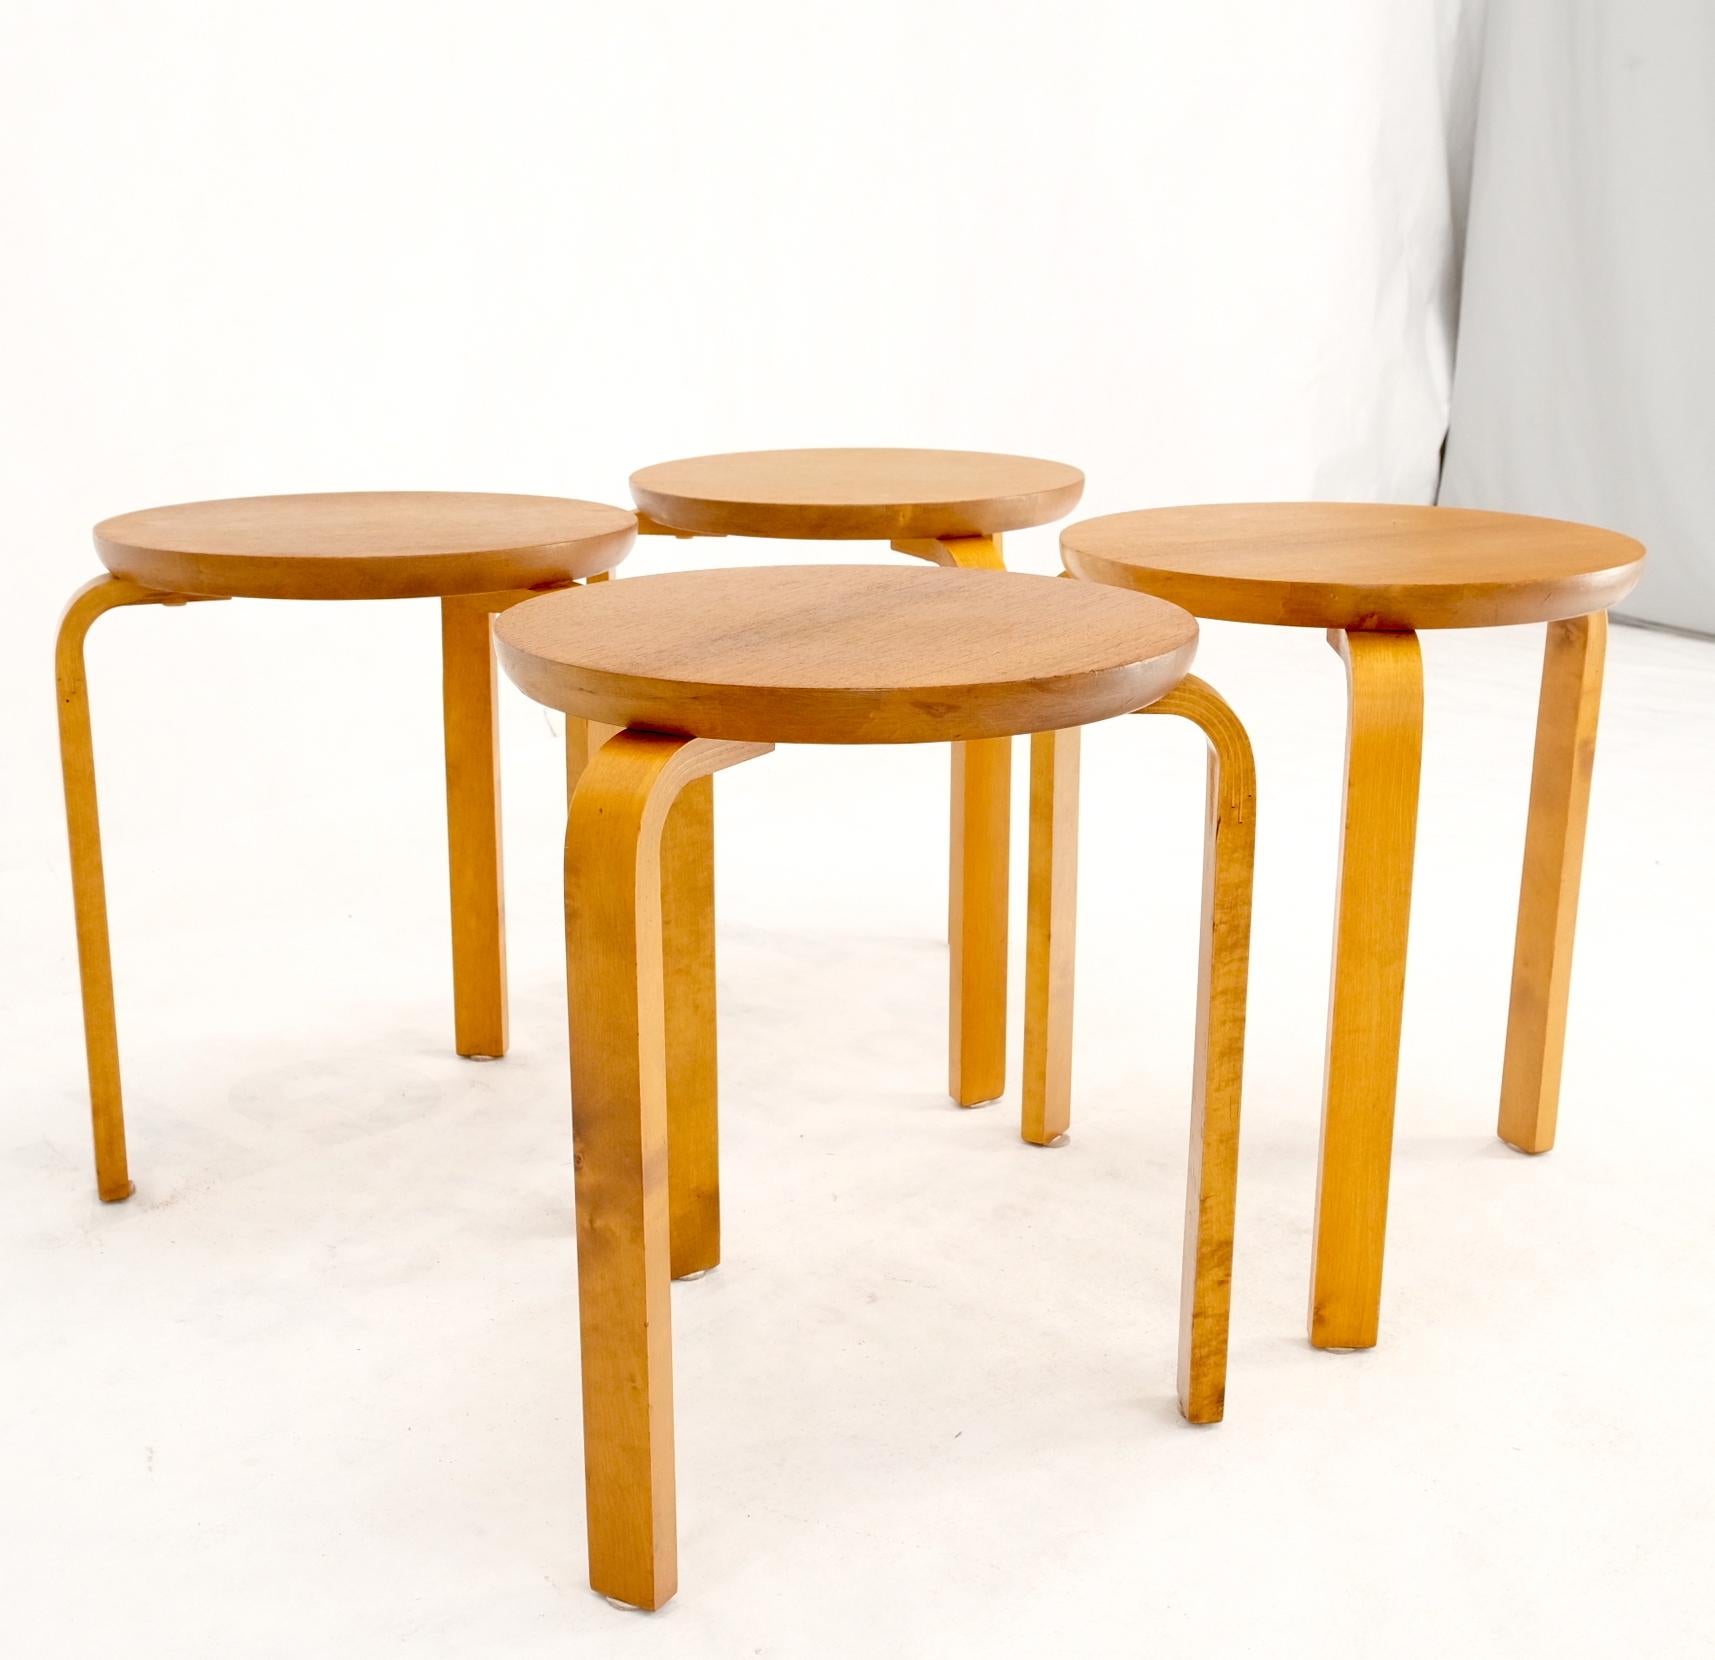 Set of 4 Alvar Aalto Round Birch Bent Leg Nesting Tables c.1950s Made in Sweden For Sale 6